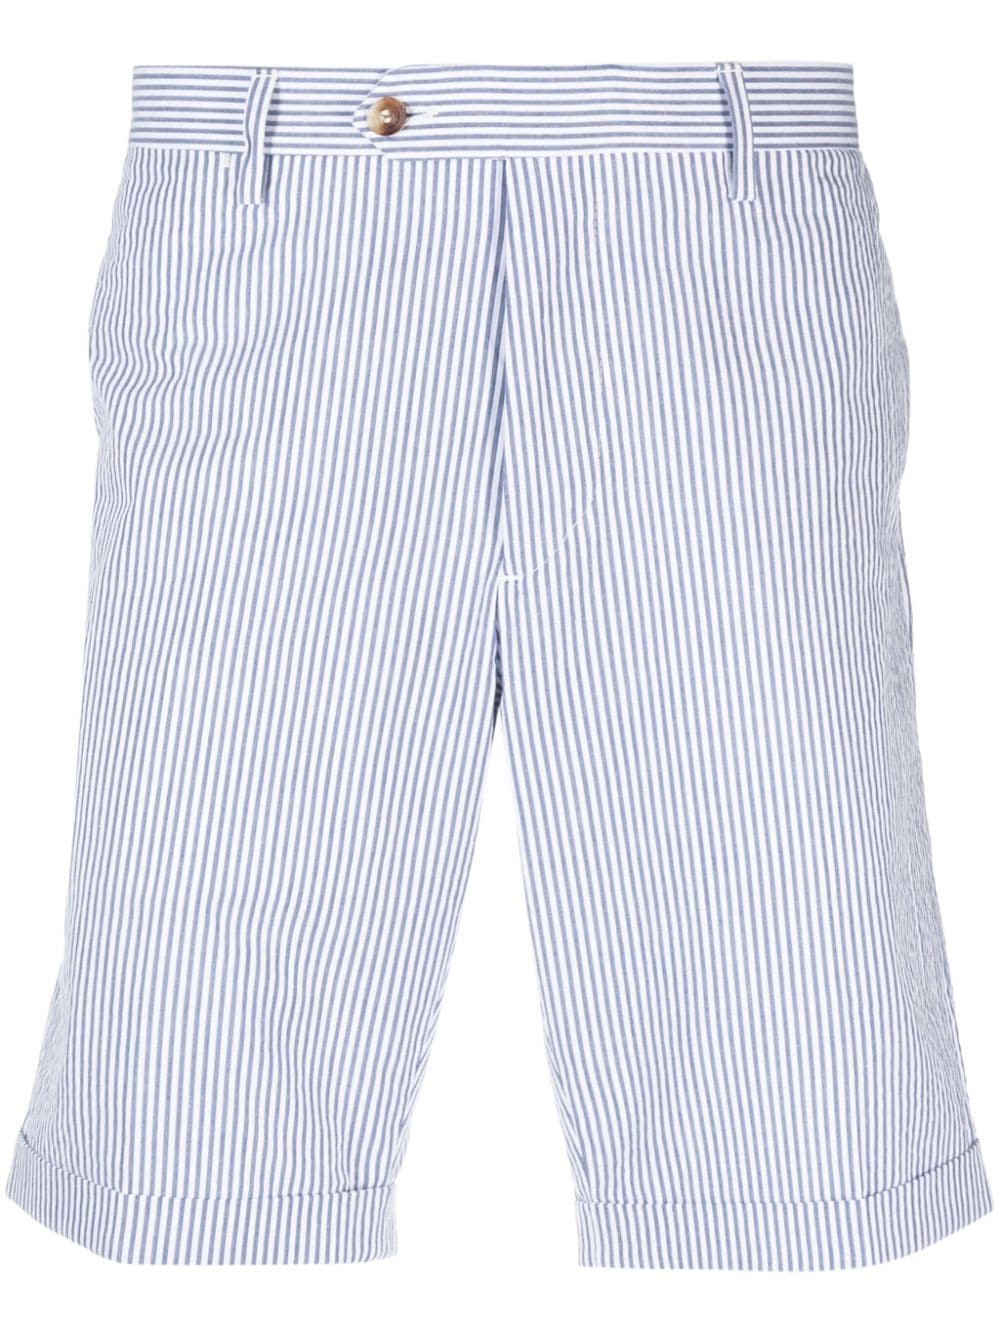 Lardini striped cotton chino shorts - Blue von Lardini